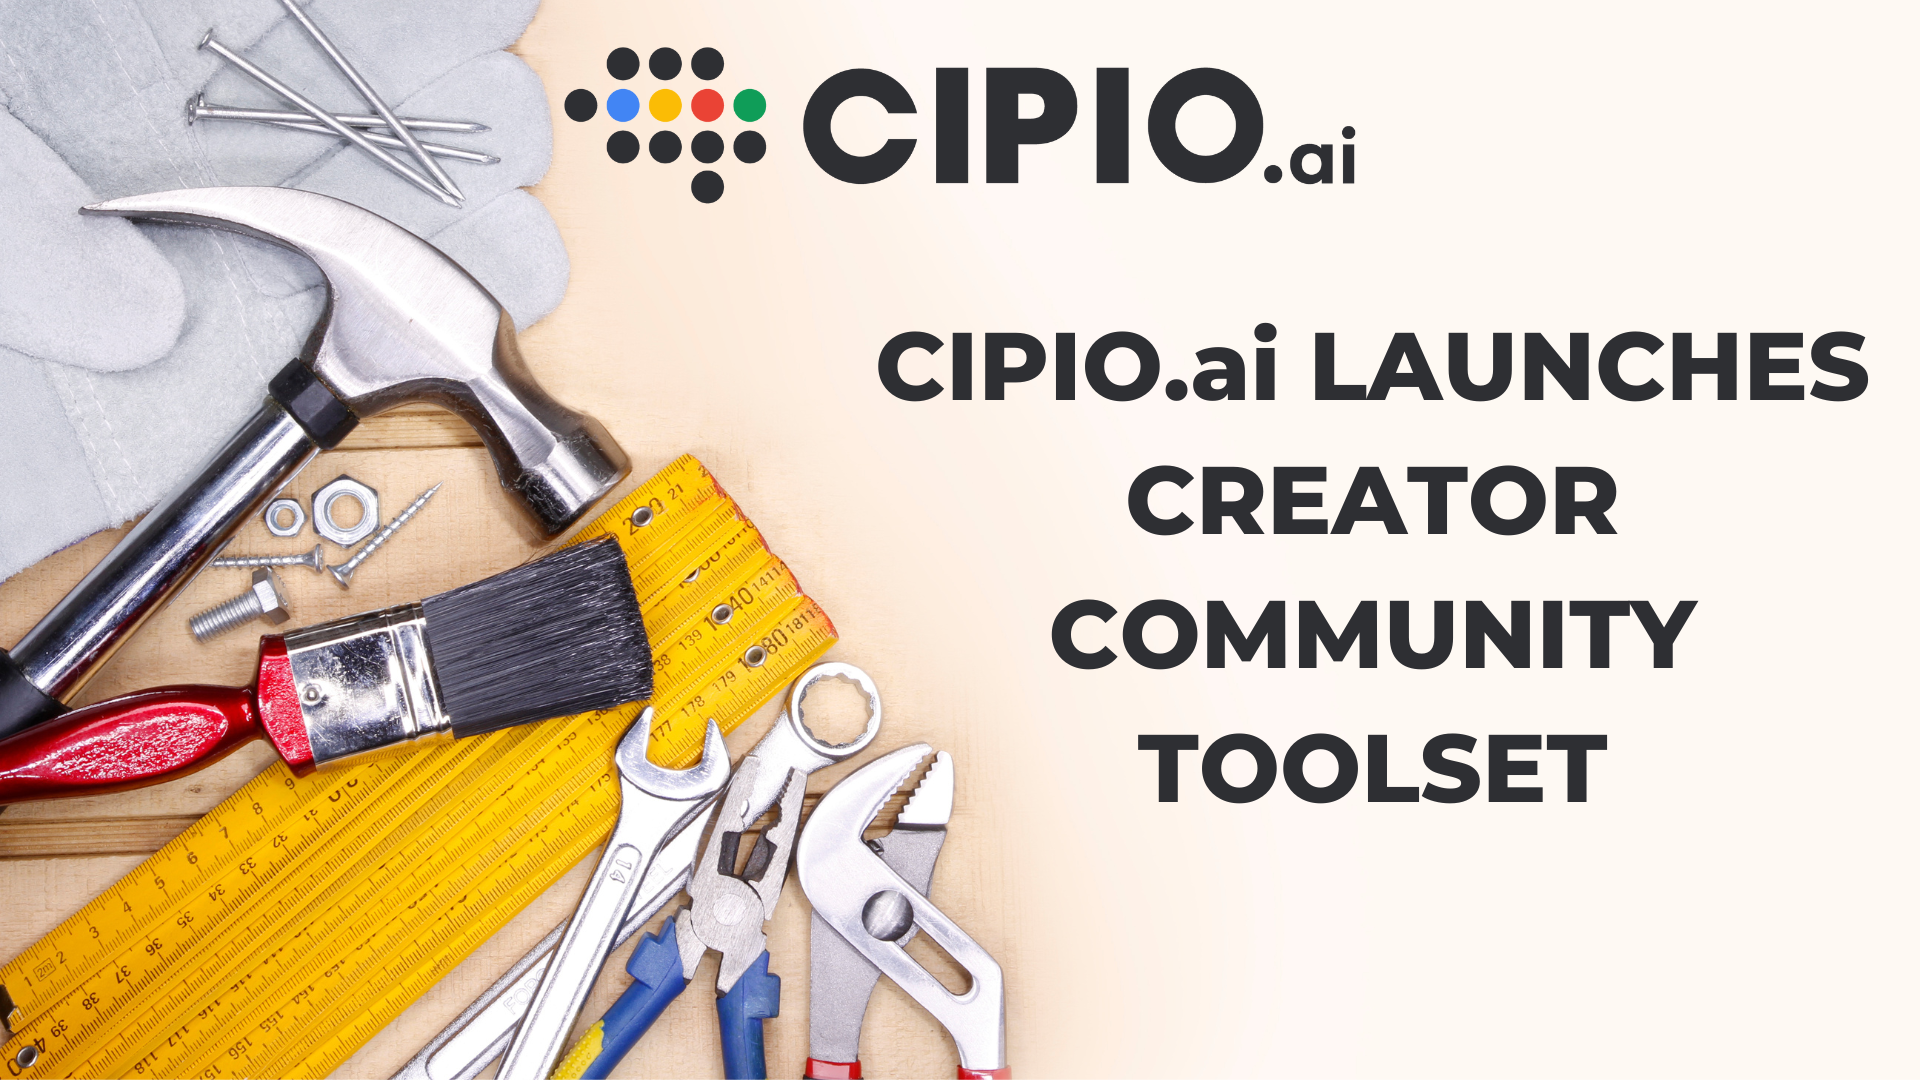 CIPIO.ai Launches Creator Community Solutions